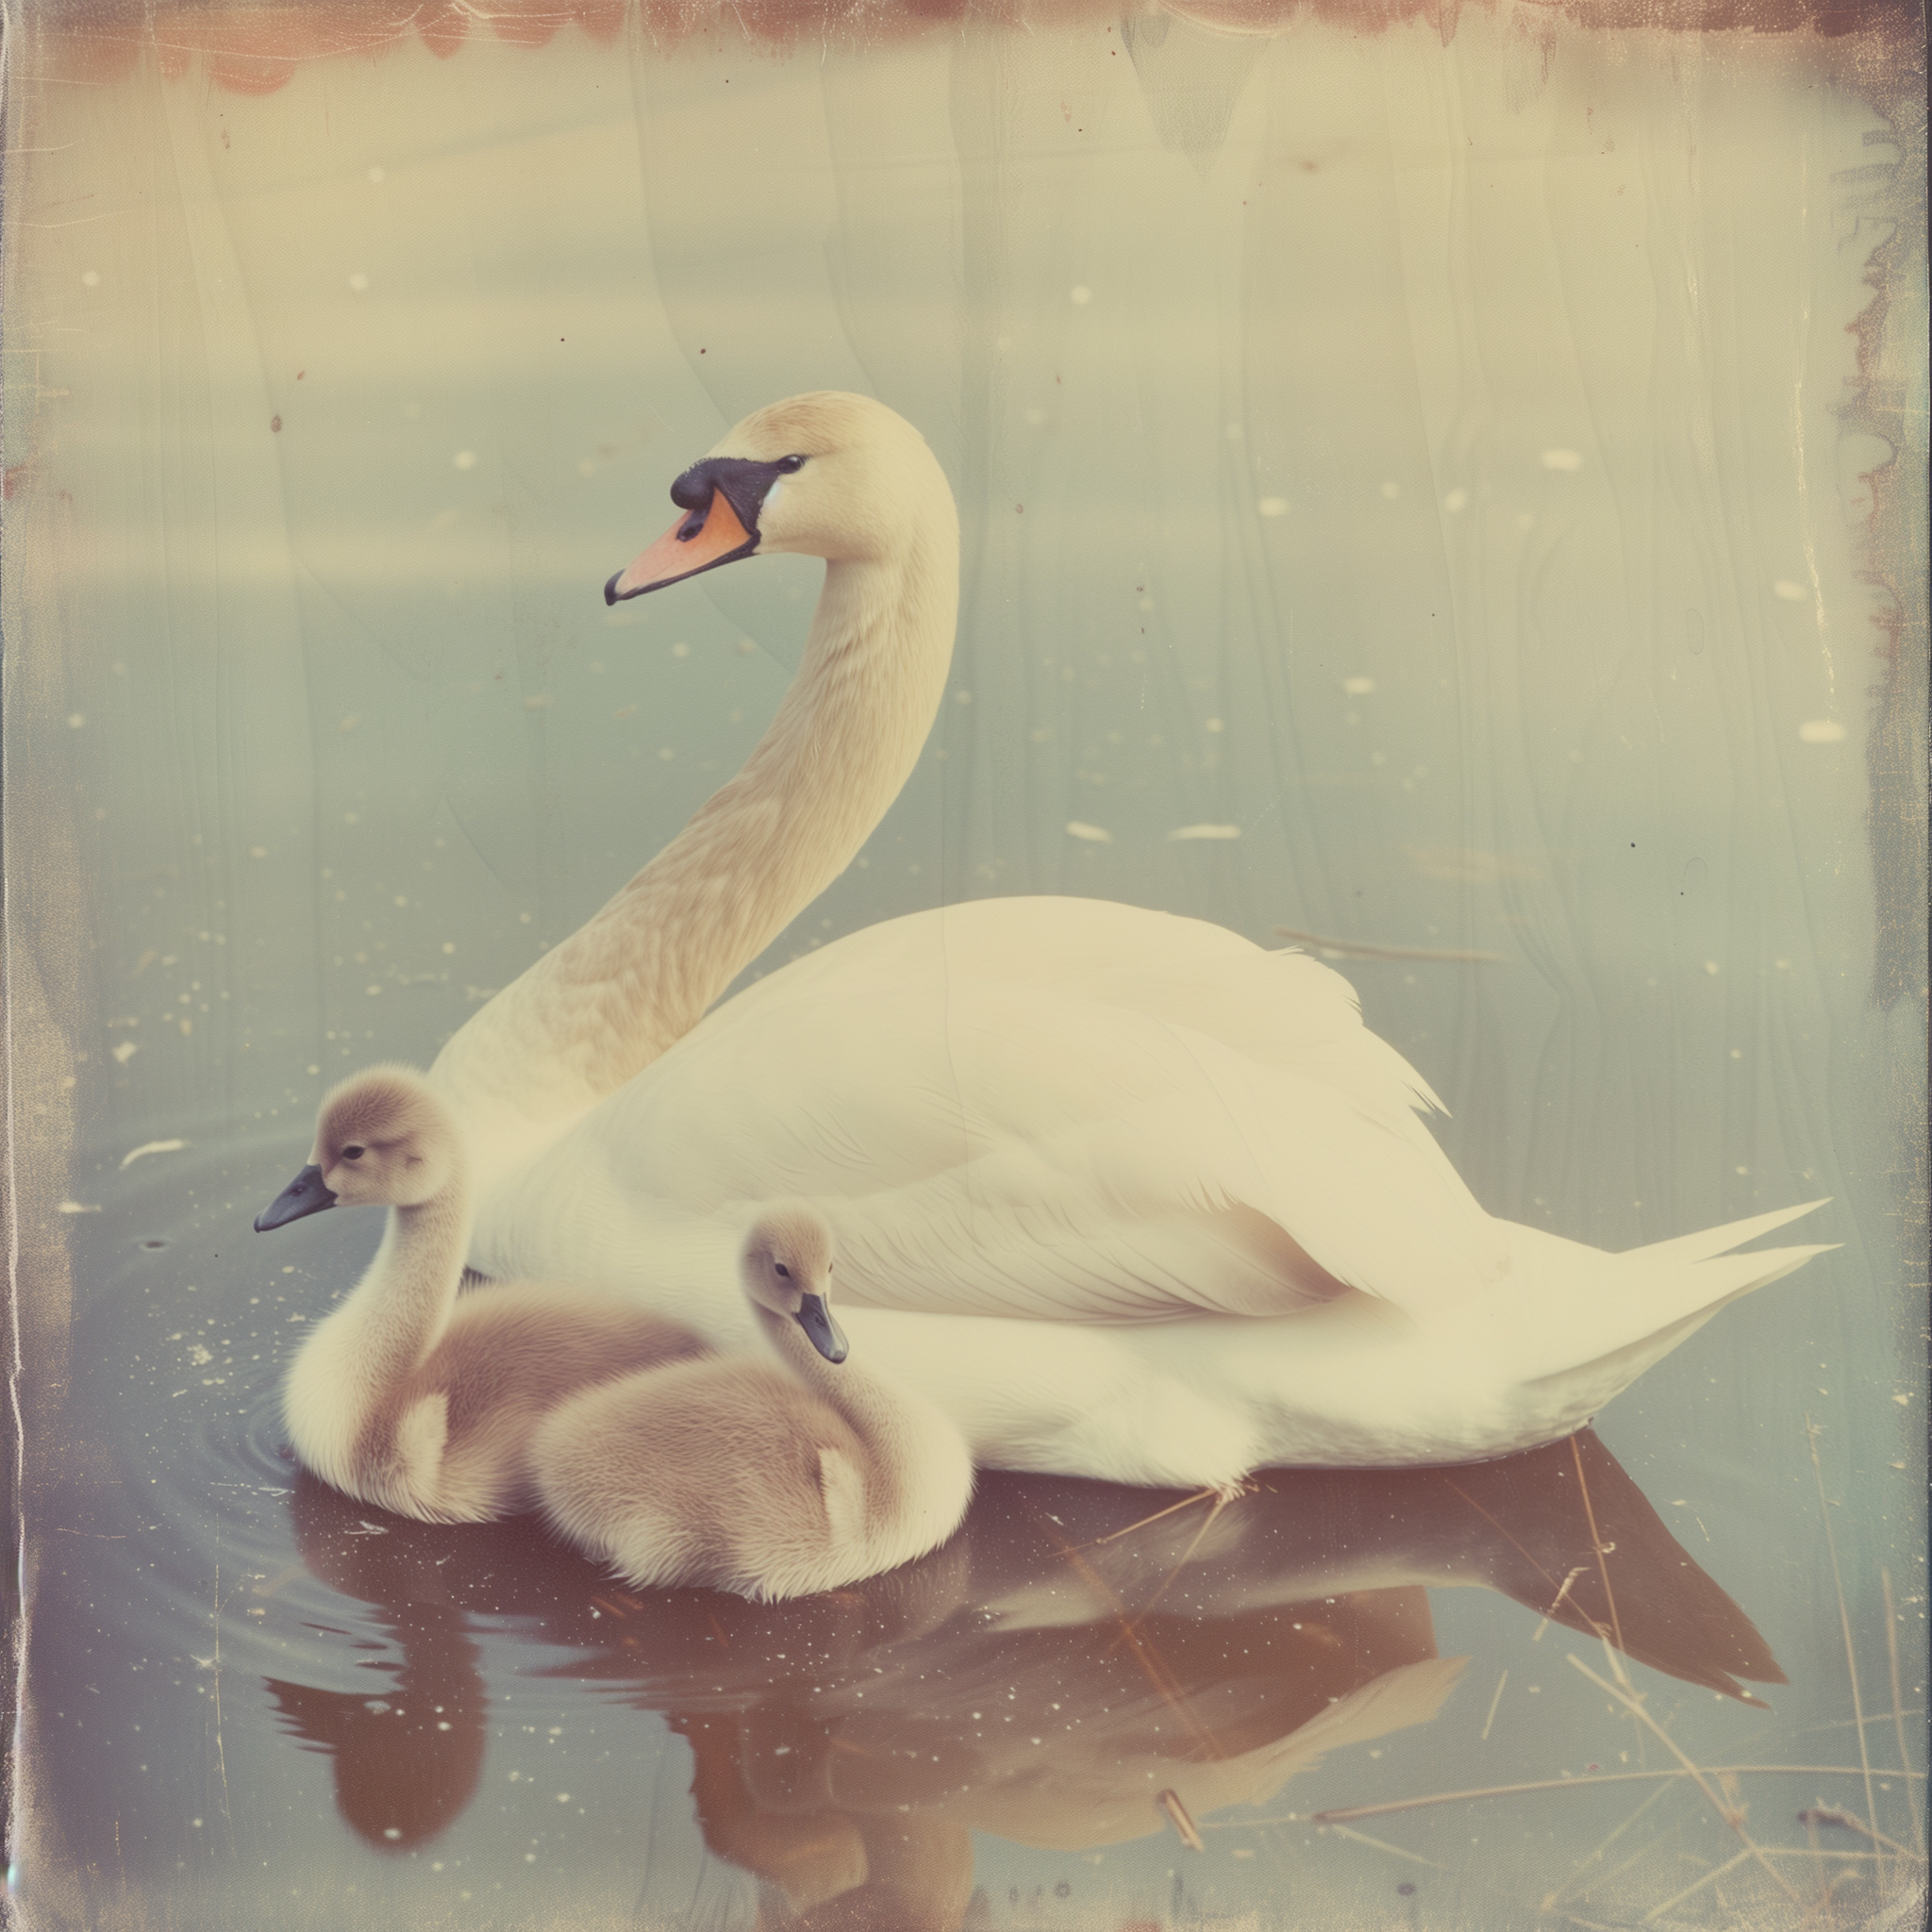 Polaroid-style avatar image of an elegant mute swan with cygnets swimming, invoking serene wildlife themes.